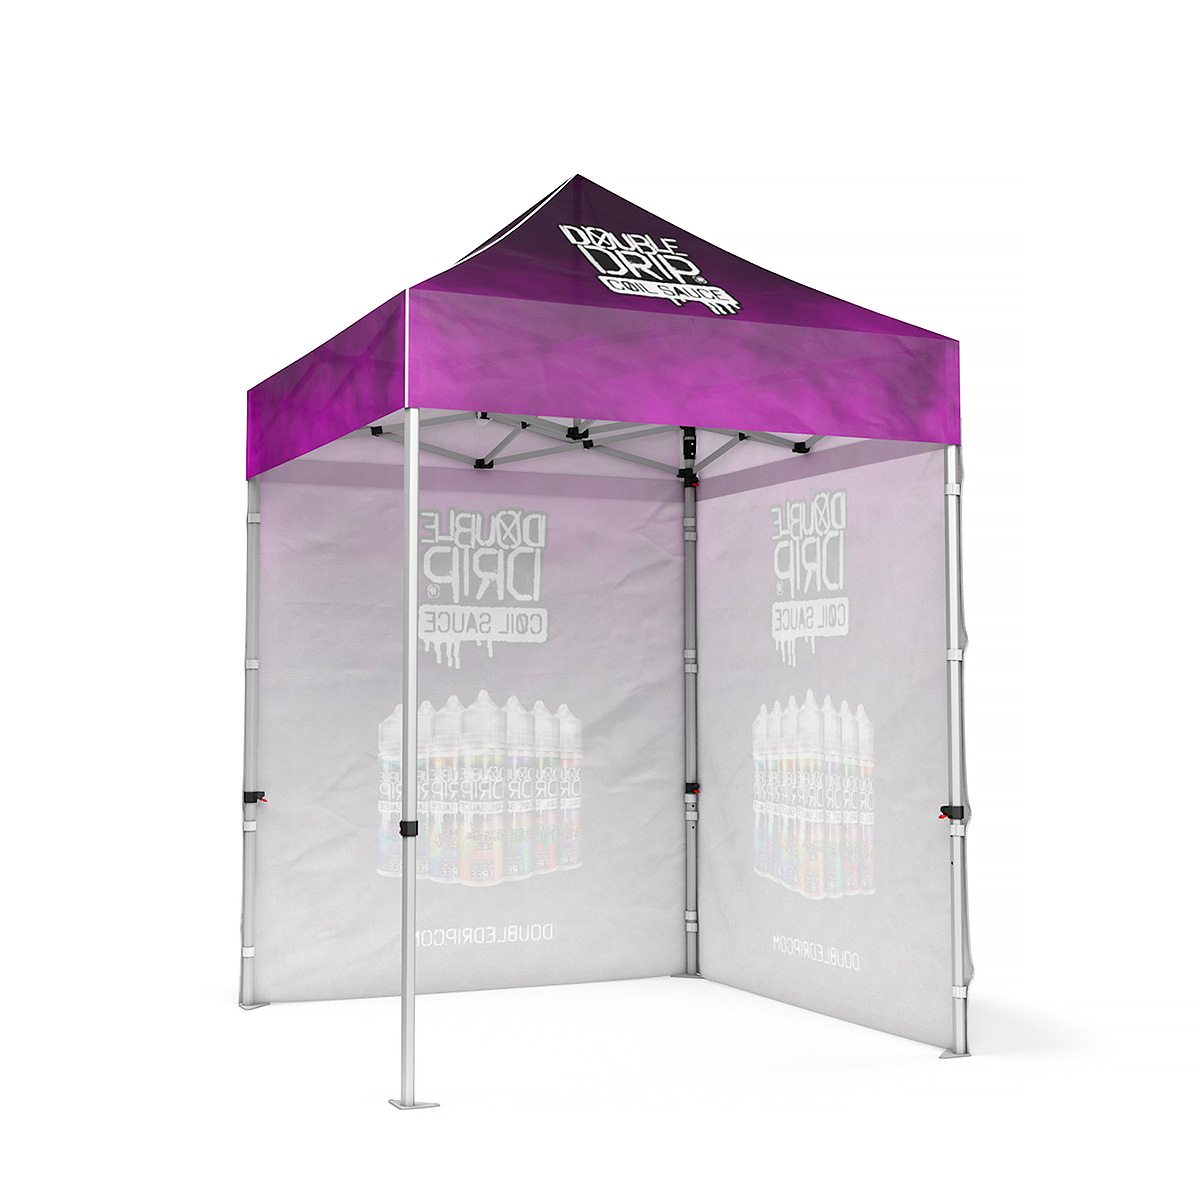 RHINO® 2x2 Promotional Tent Gazebo - Build Your Own Custom Event Tent Kit